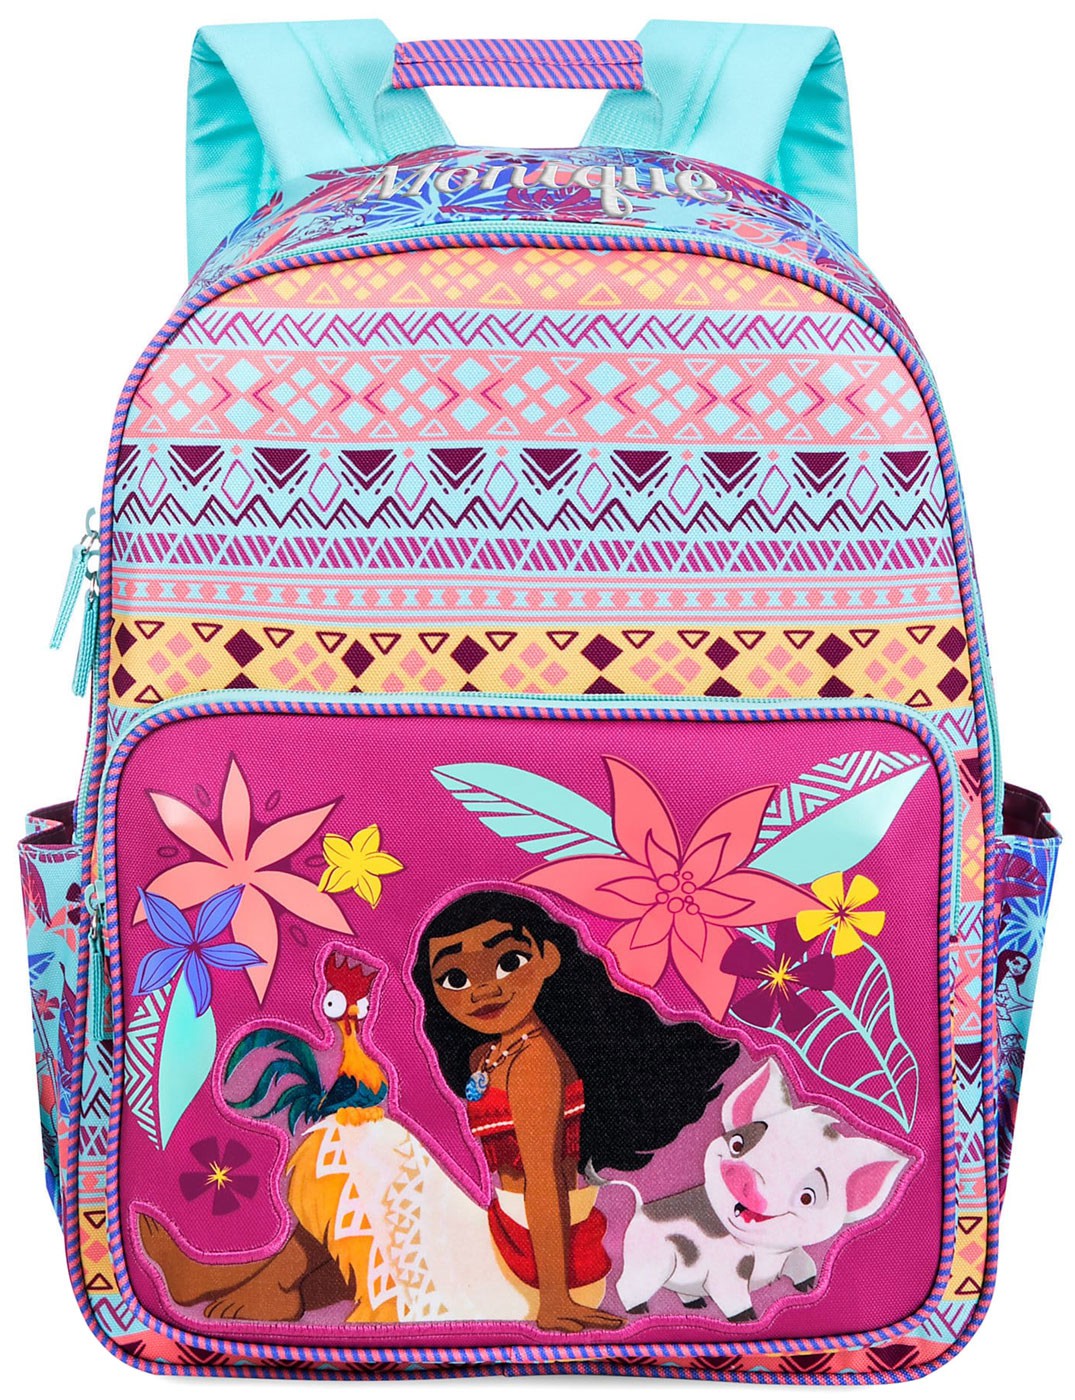 Disney Moana Moana Backpack - image 1 of 3